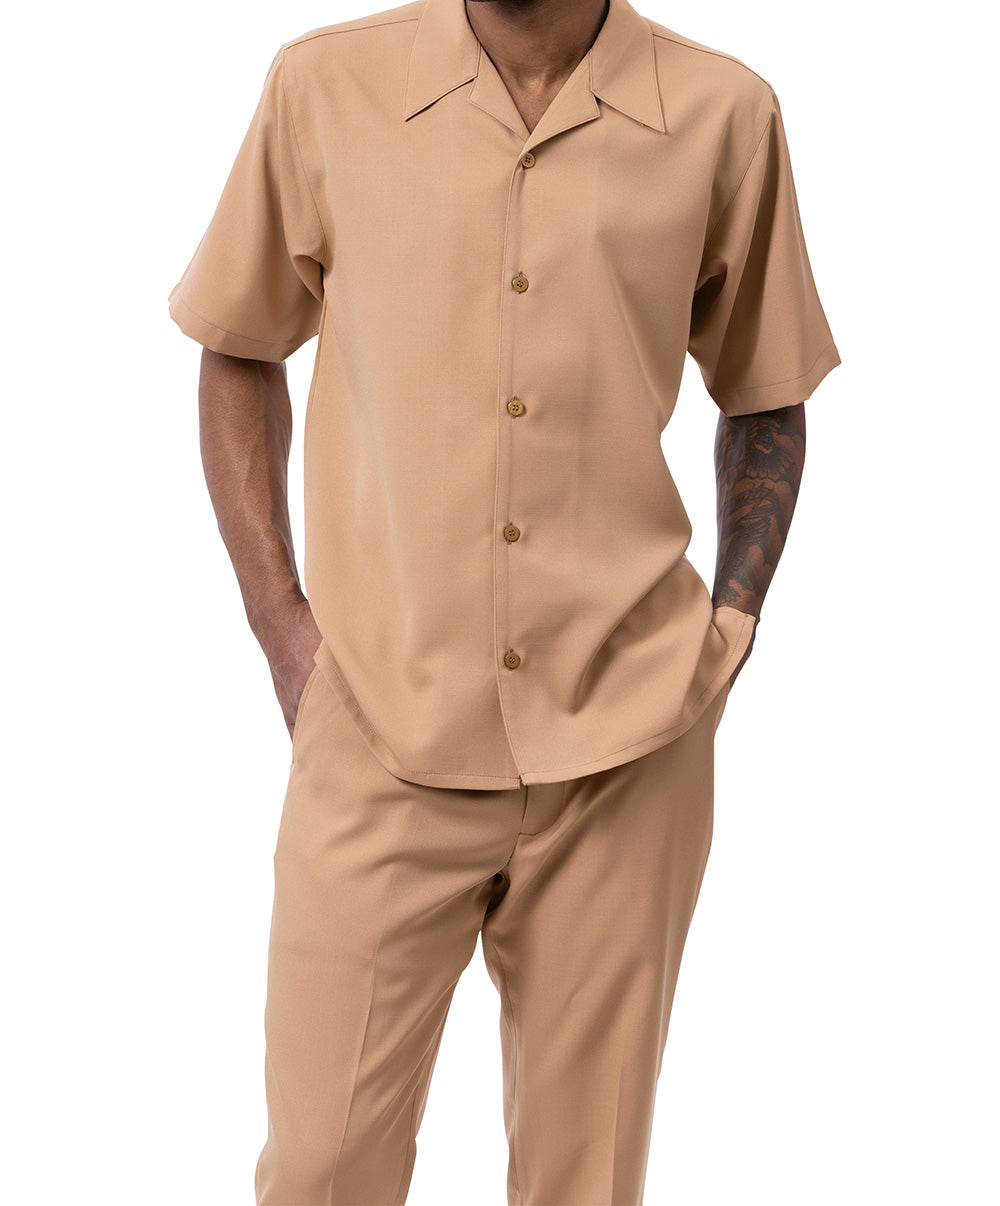 Solid Tan Walking Suit 2 Piece Short Sleeve Set